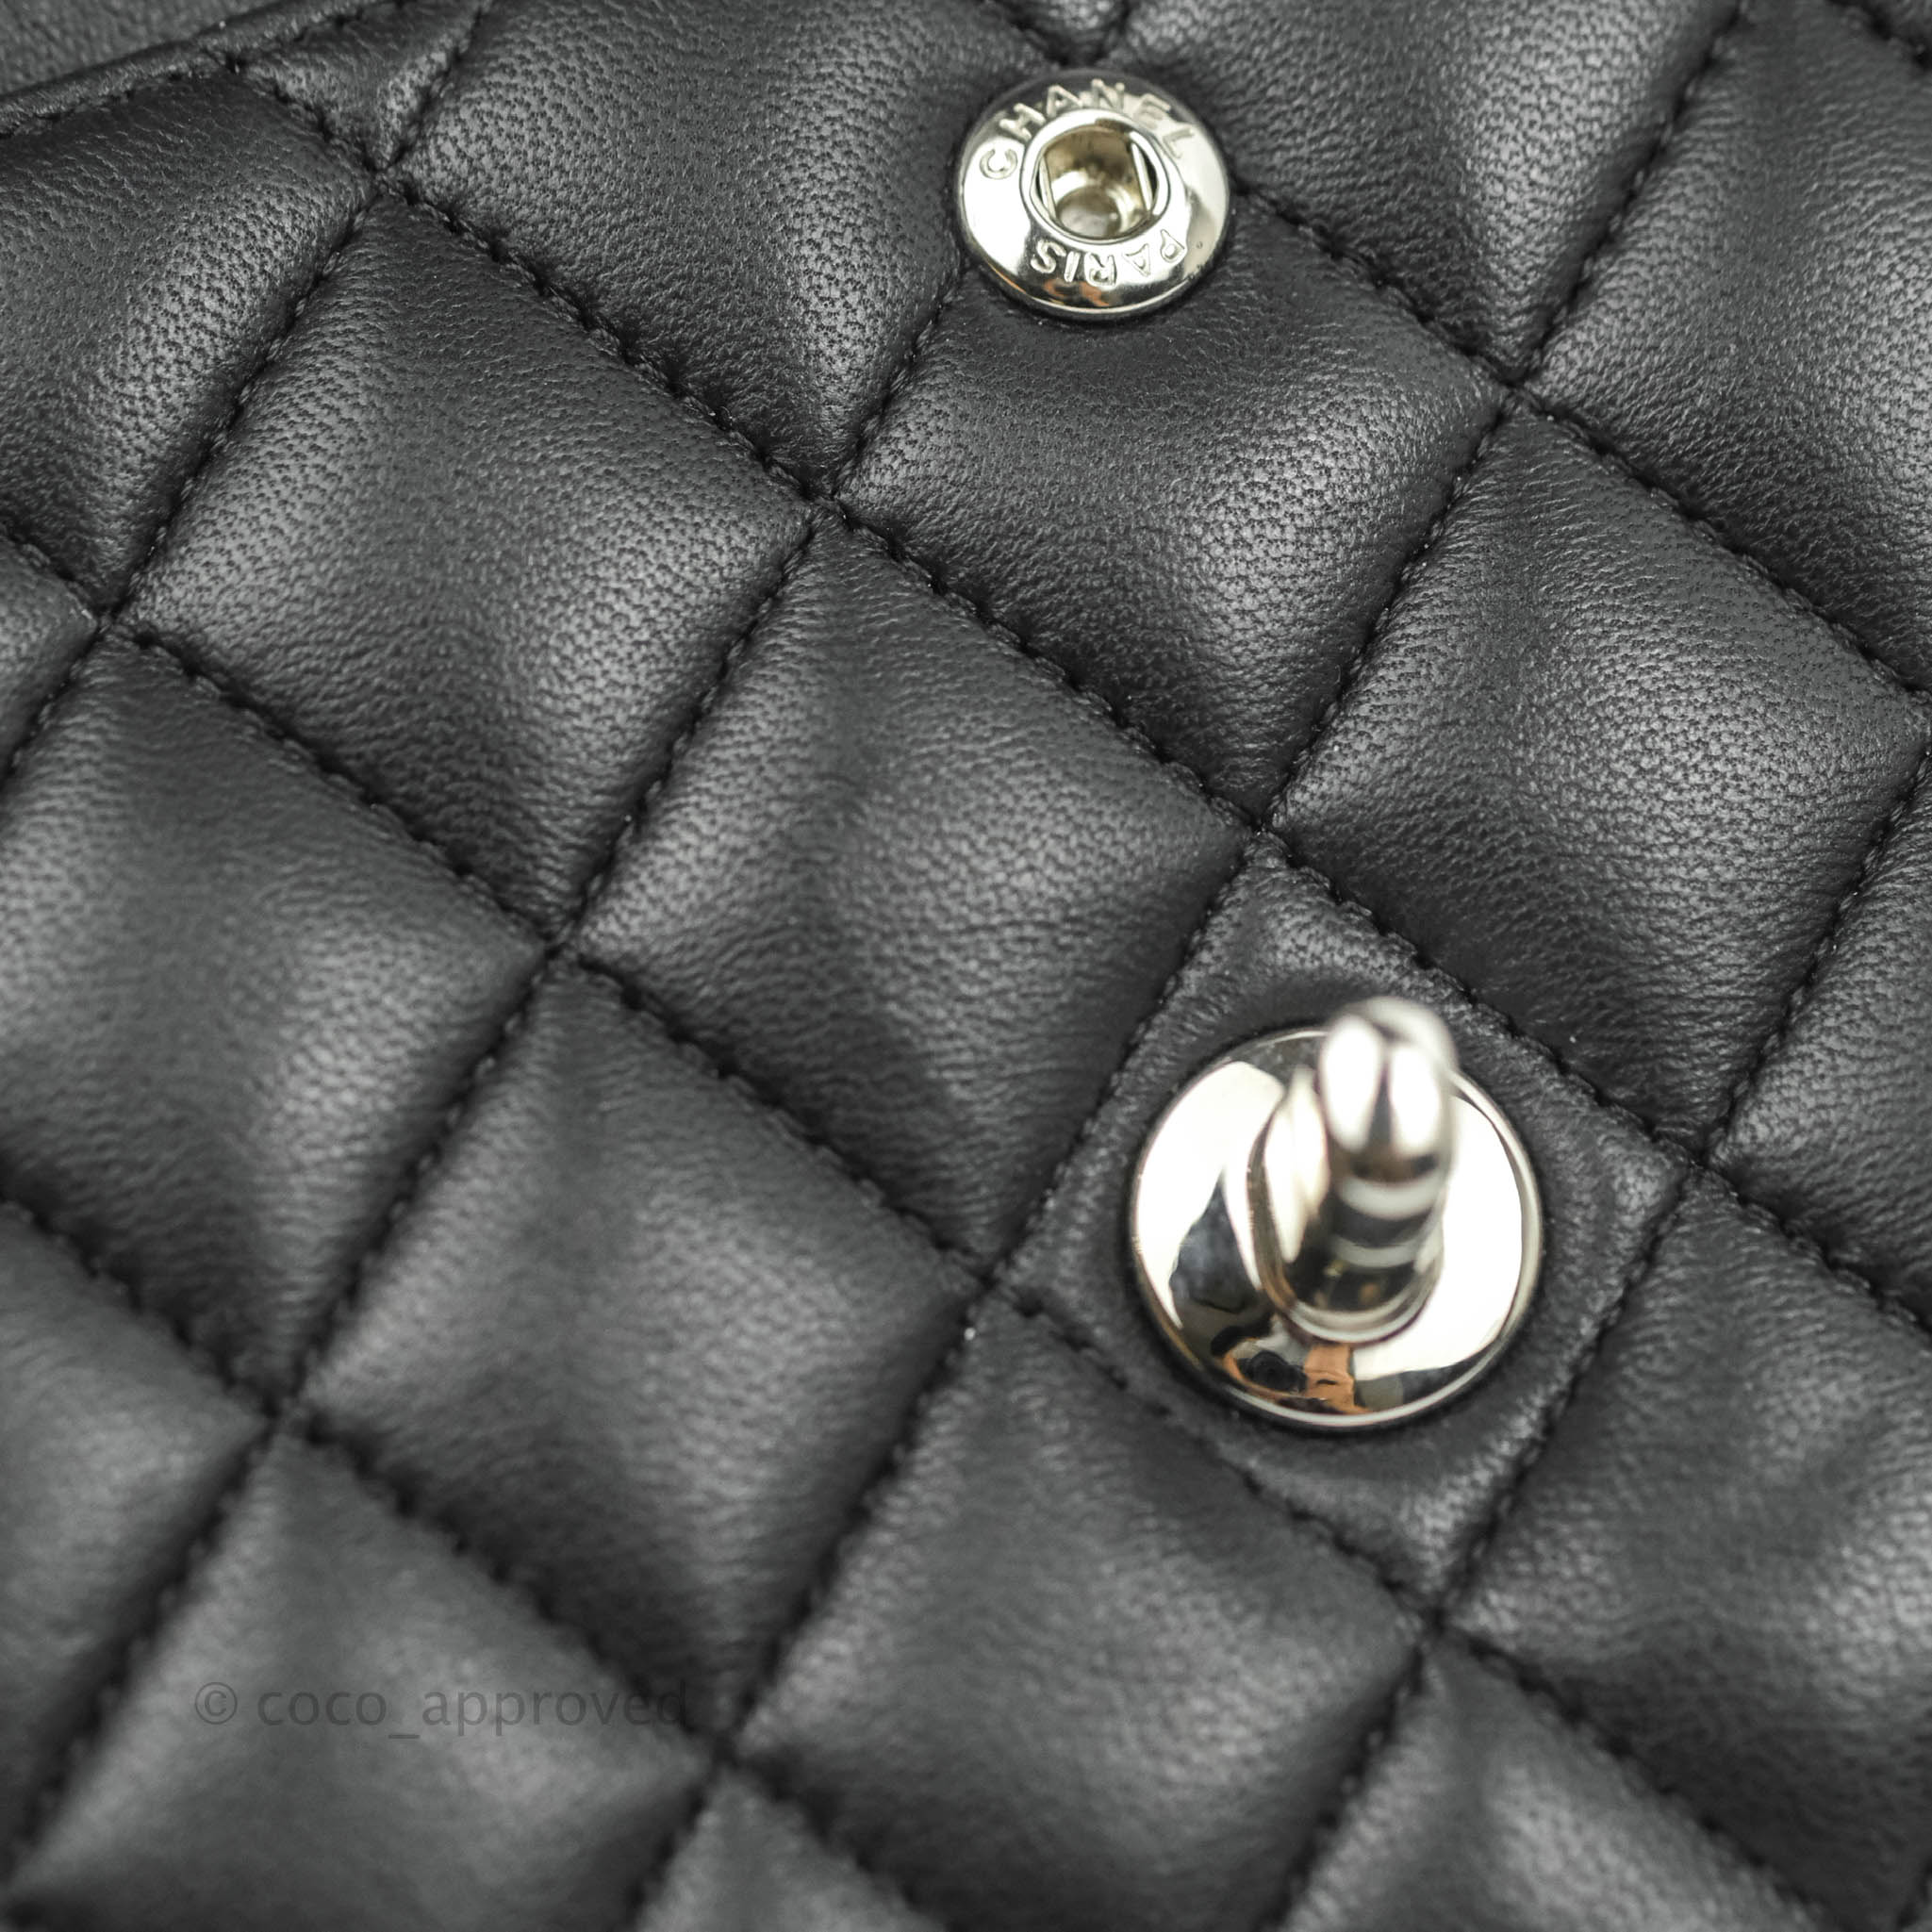 Black Chanel Medium Classic Lambskin Double Flap Bag – Designer Revival